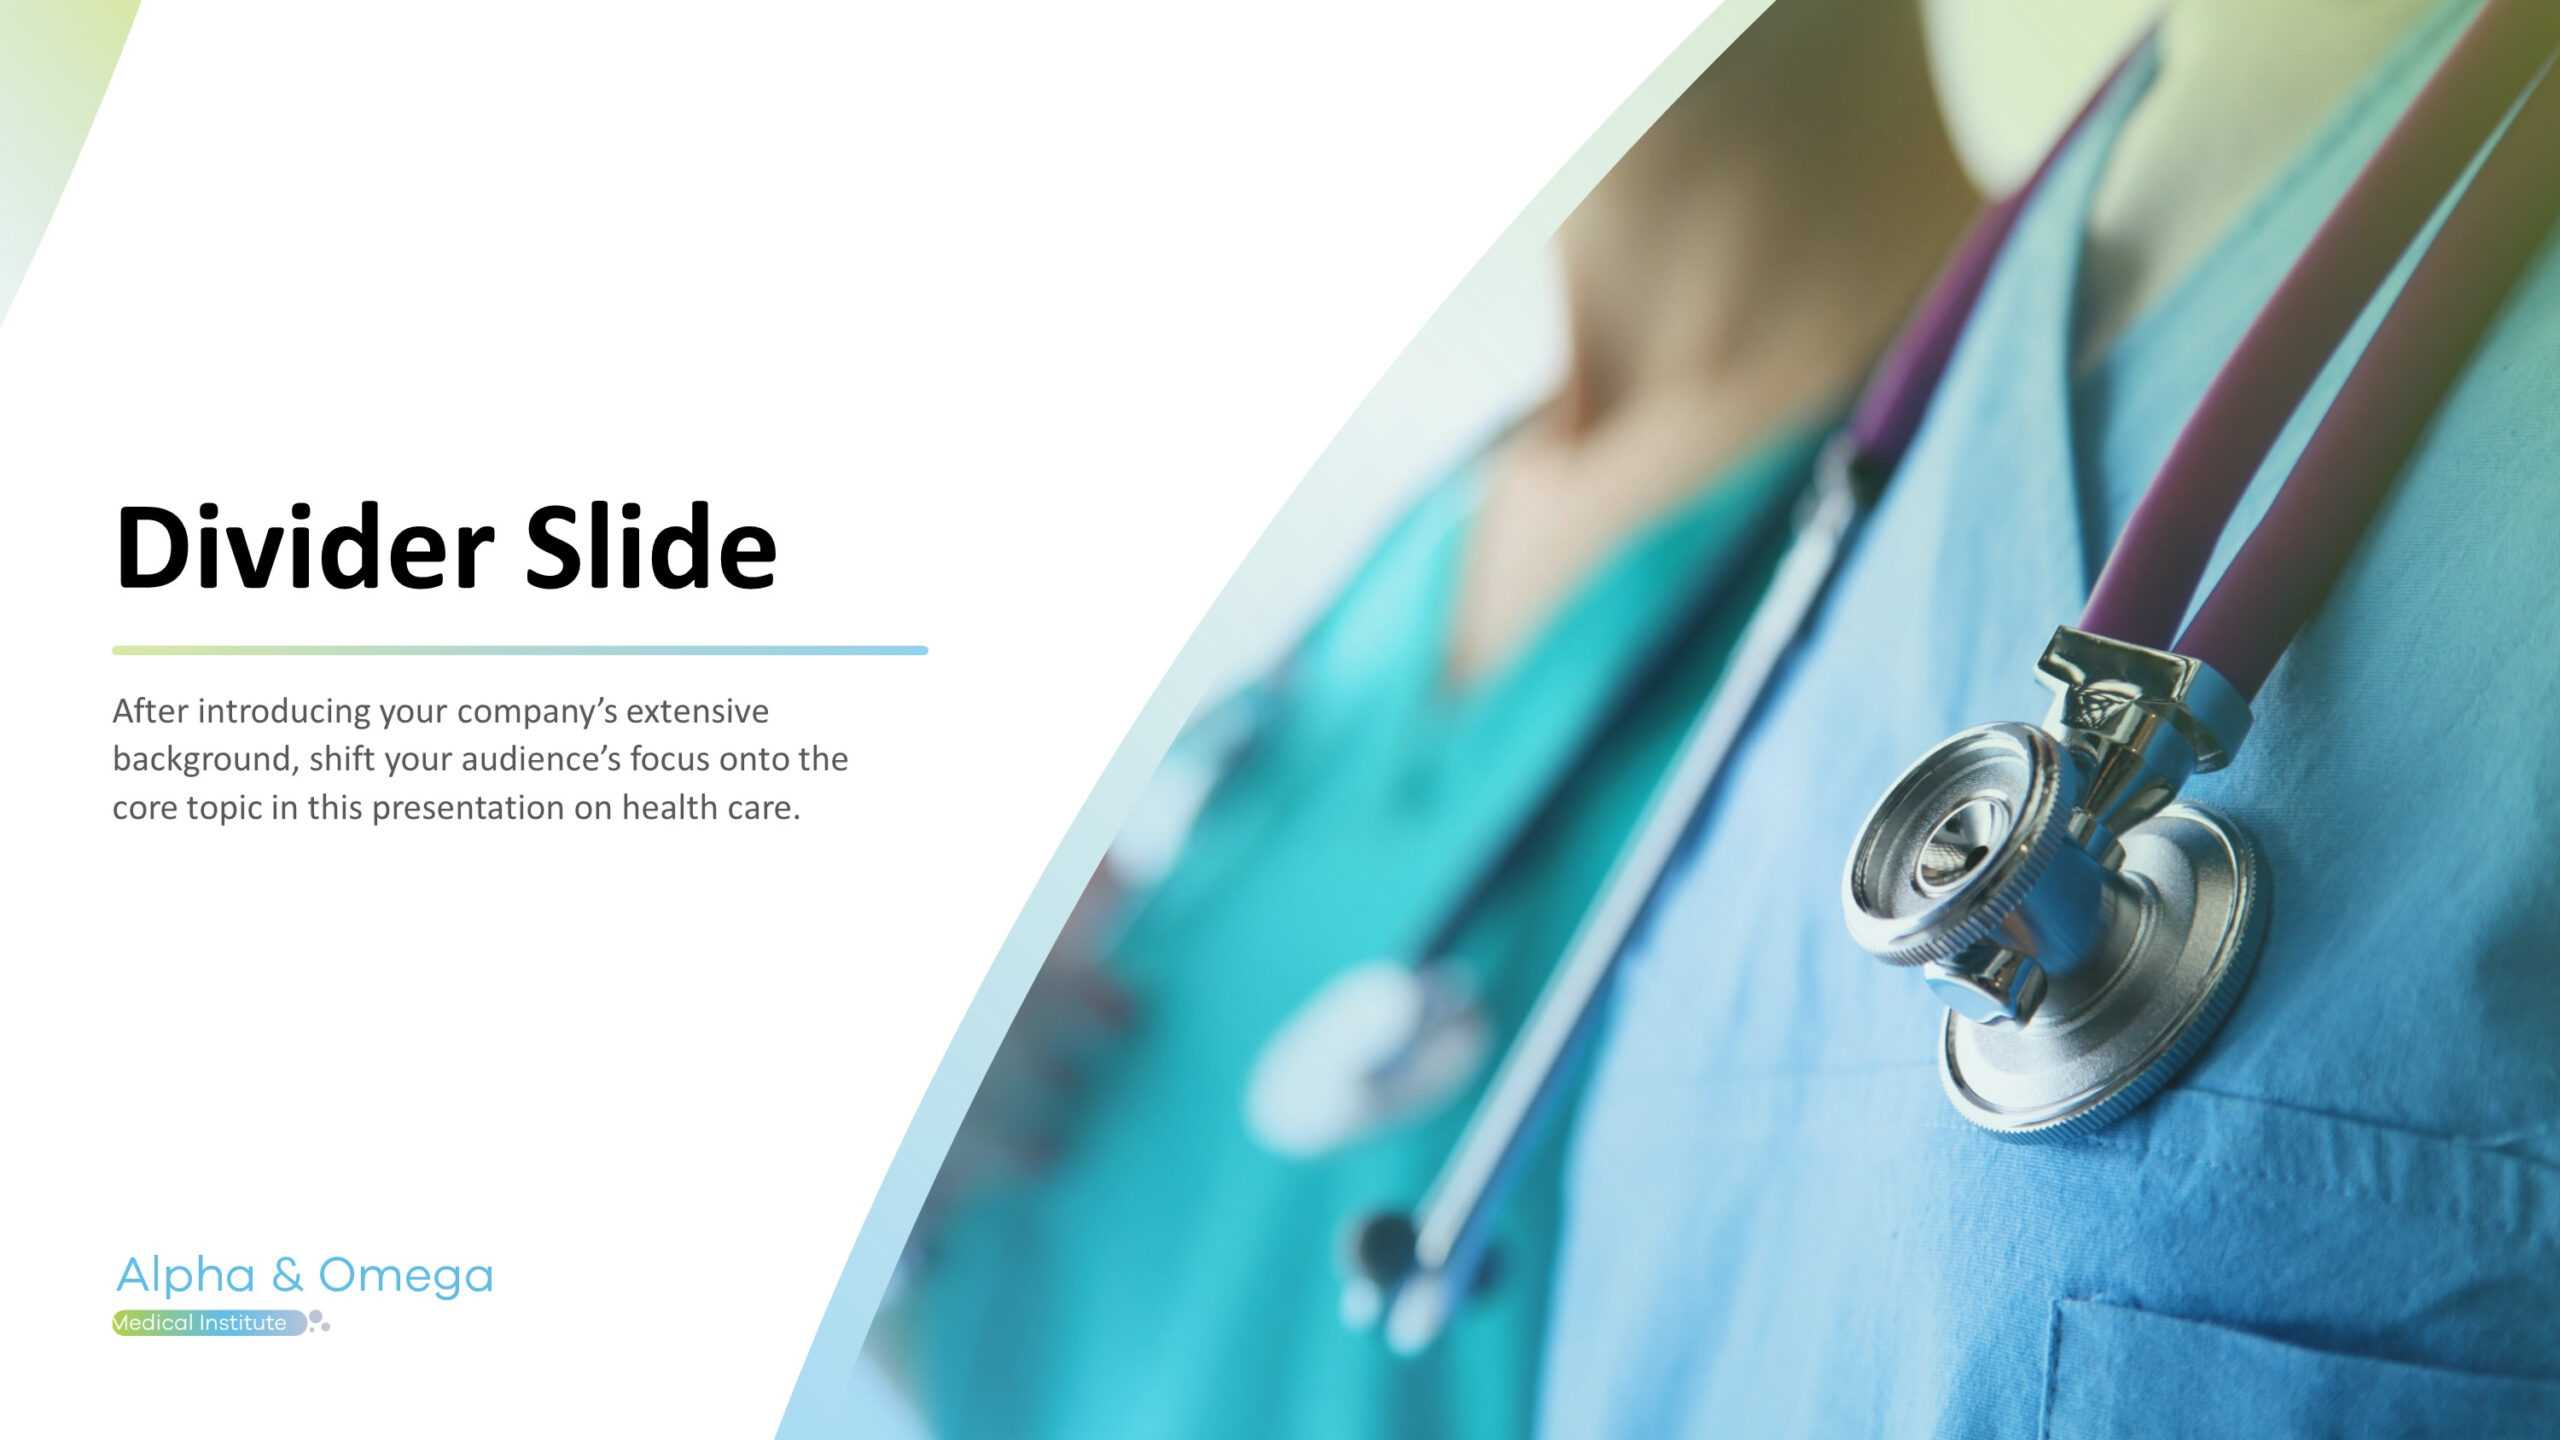 Nursing Diagnosis Premium Powerpoint Template - Slidestore Inside Free Nursing Powerpoint Templates